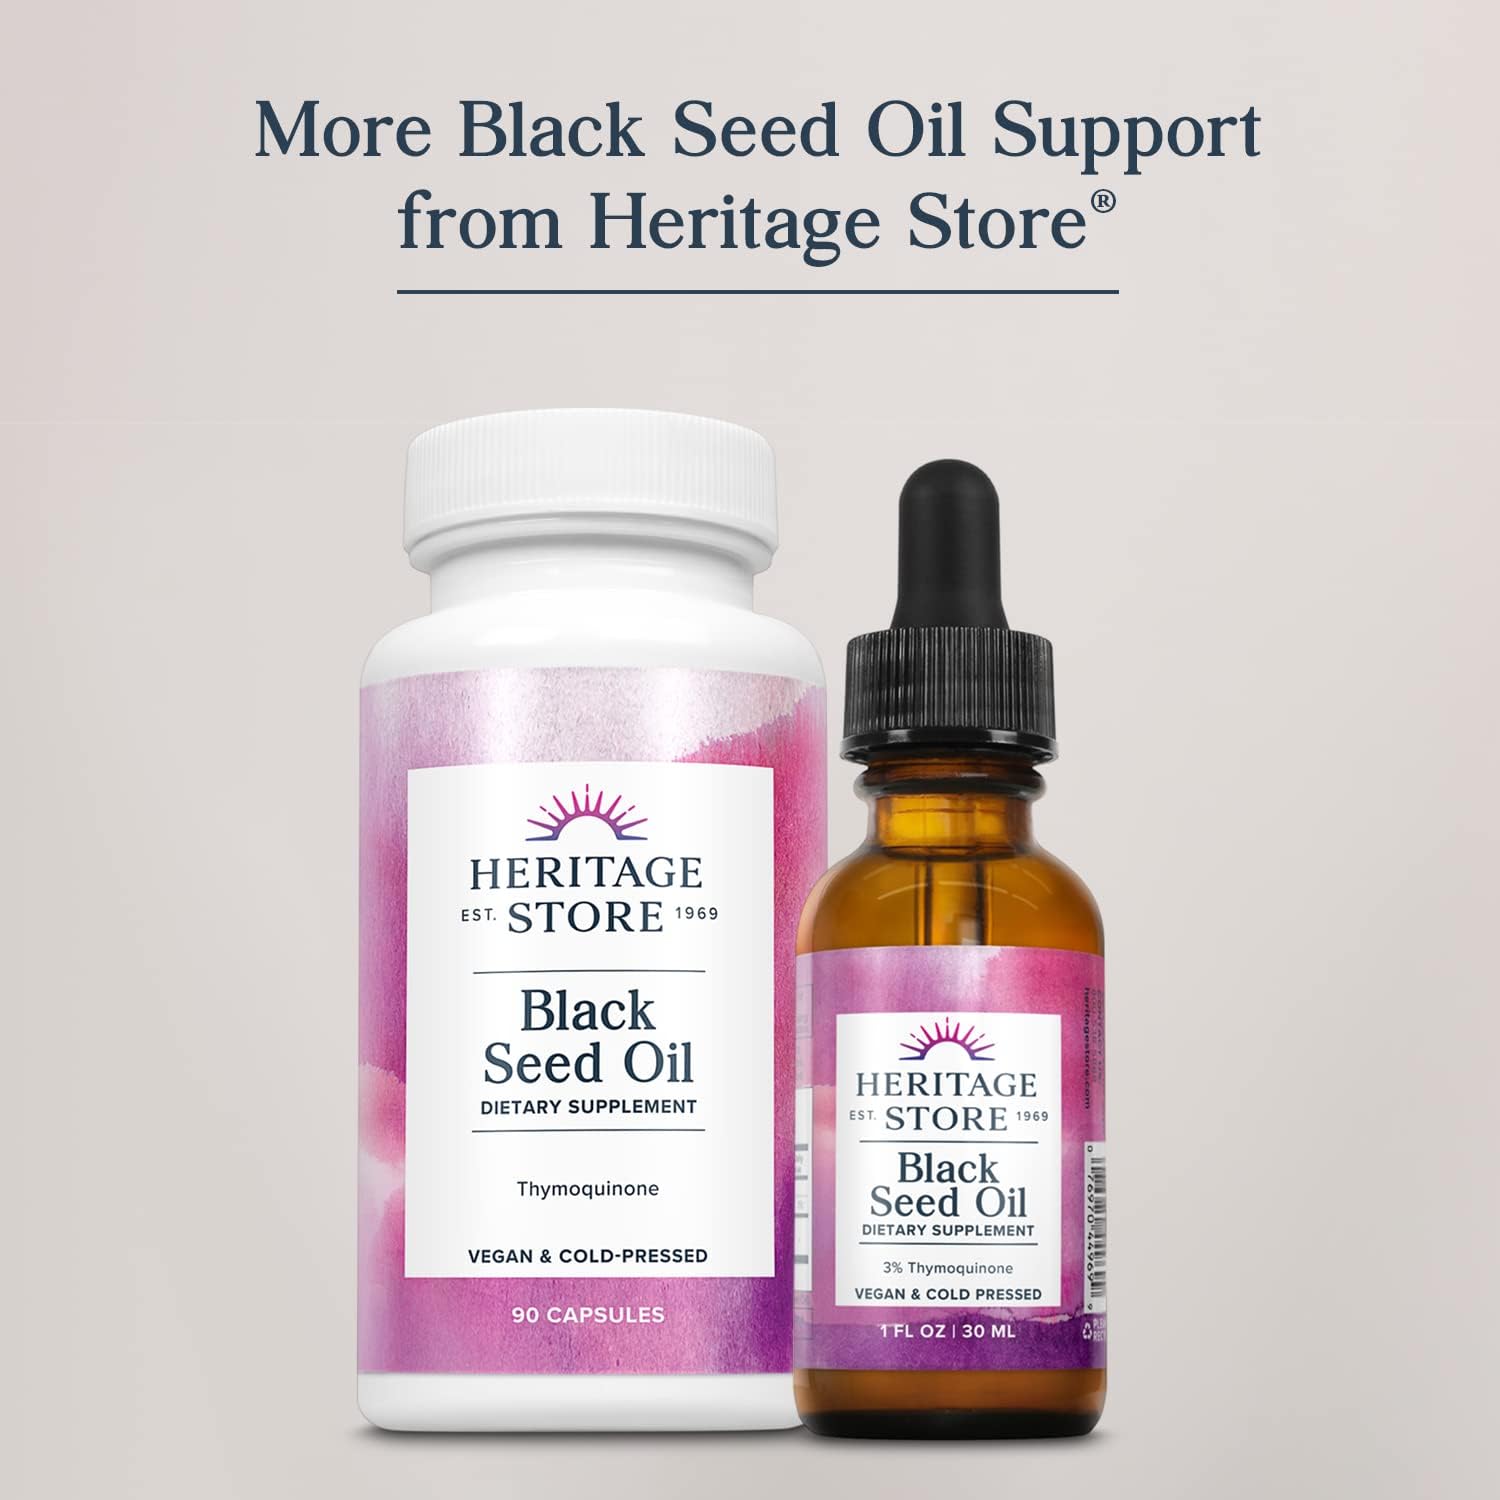 HERITAGE STORE Black Seed Oil, Organic, Cold Pressed Nigella Sativa Su